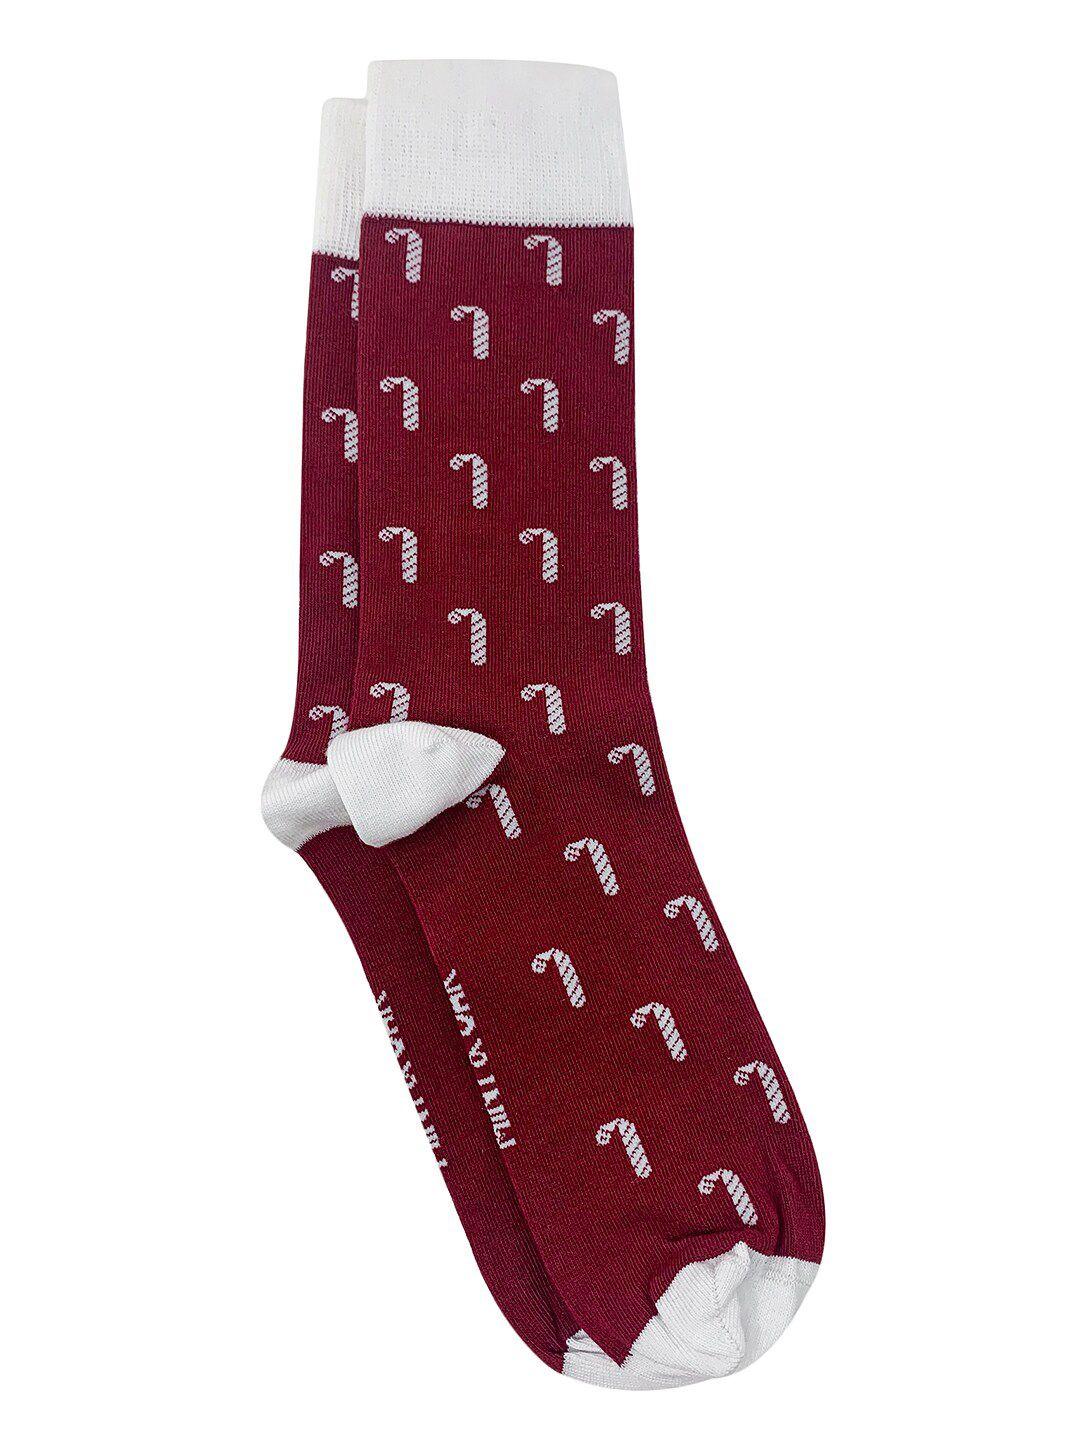 mint-&-oak-men-maroon-&-white-patterned-anti-bacterial-calf-length-socks